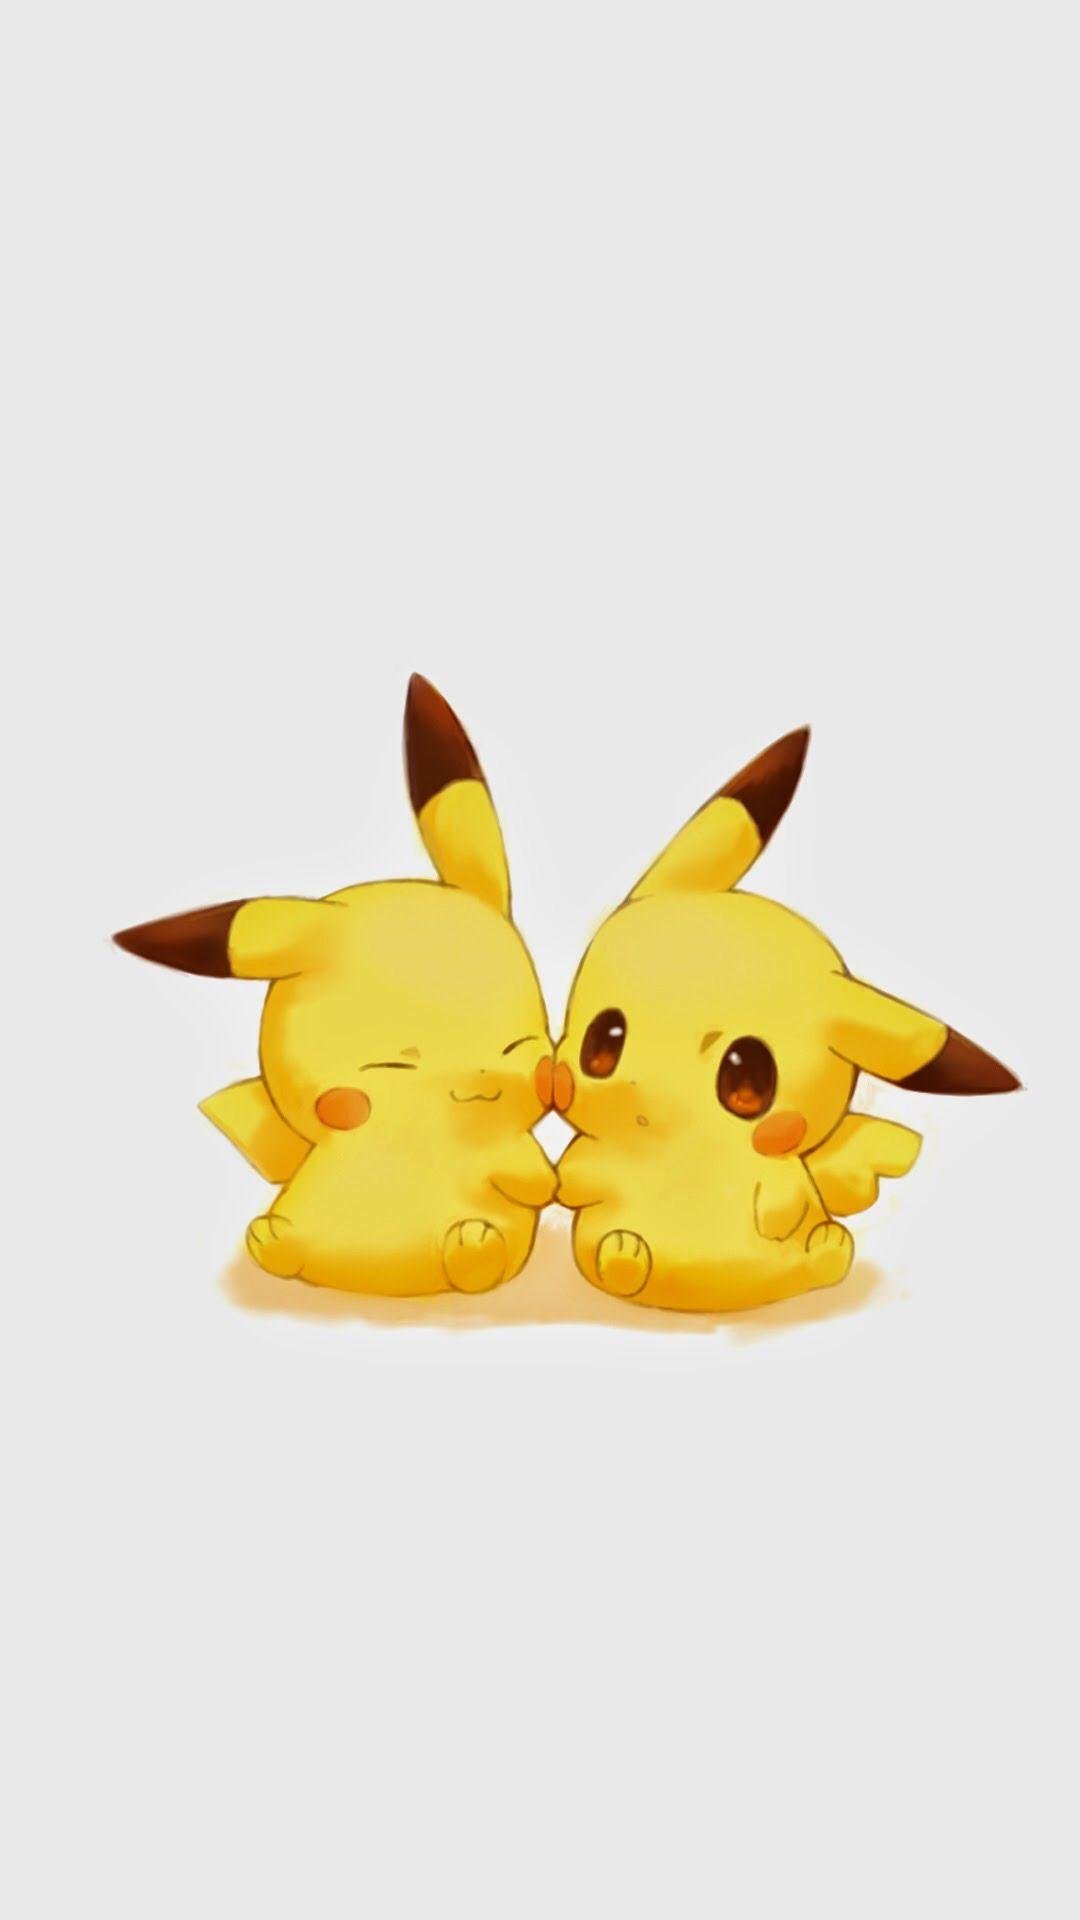 Pikachu and Eevee  Cute pokemon wallpaper, Cute pikachu, Cute pokemon